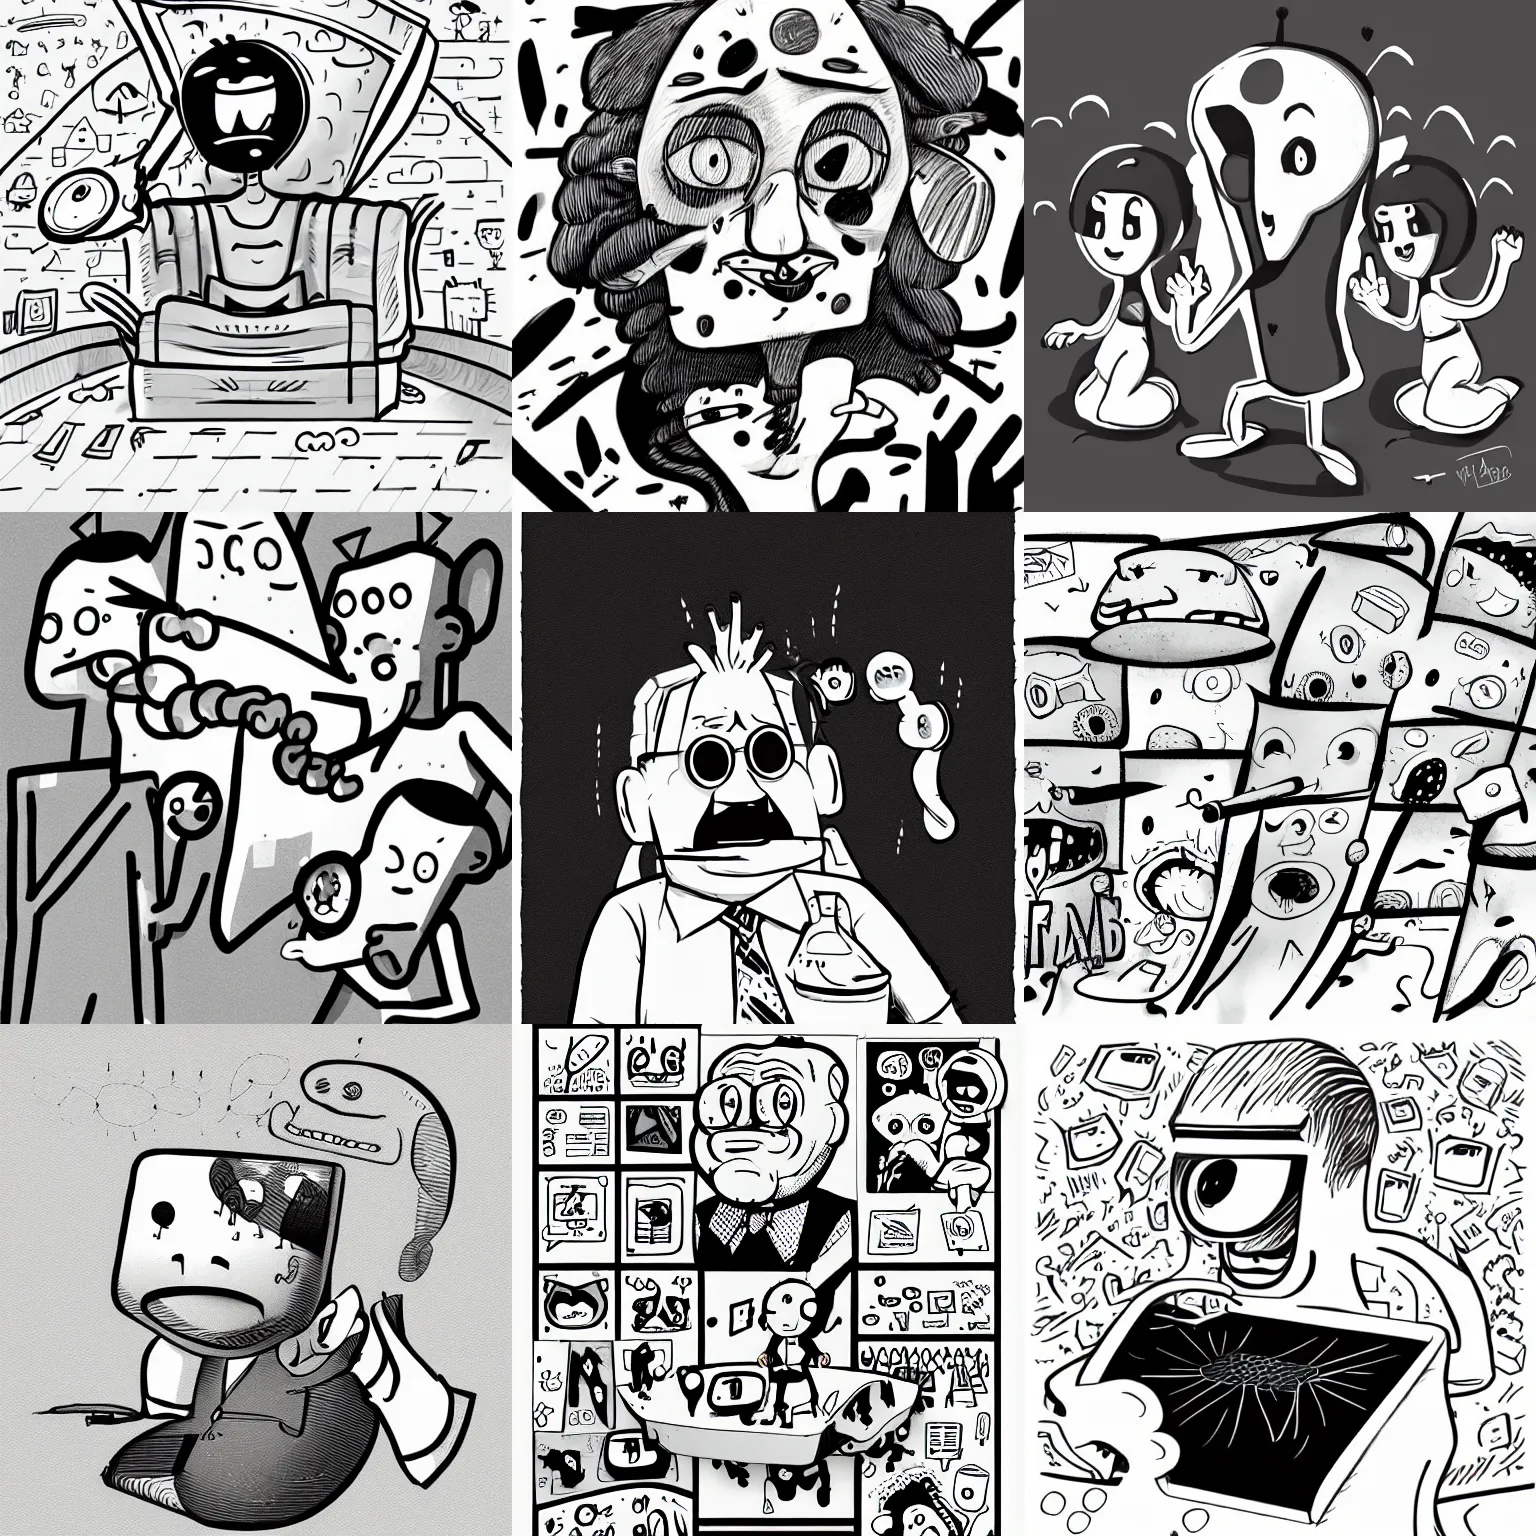 ArtStation - Comic - black and white